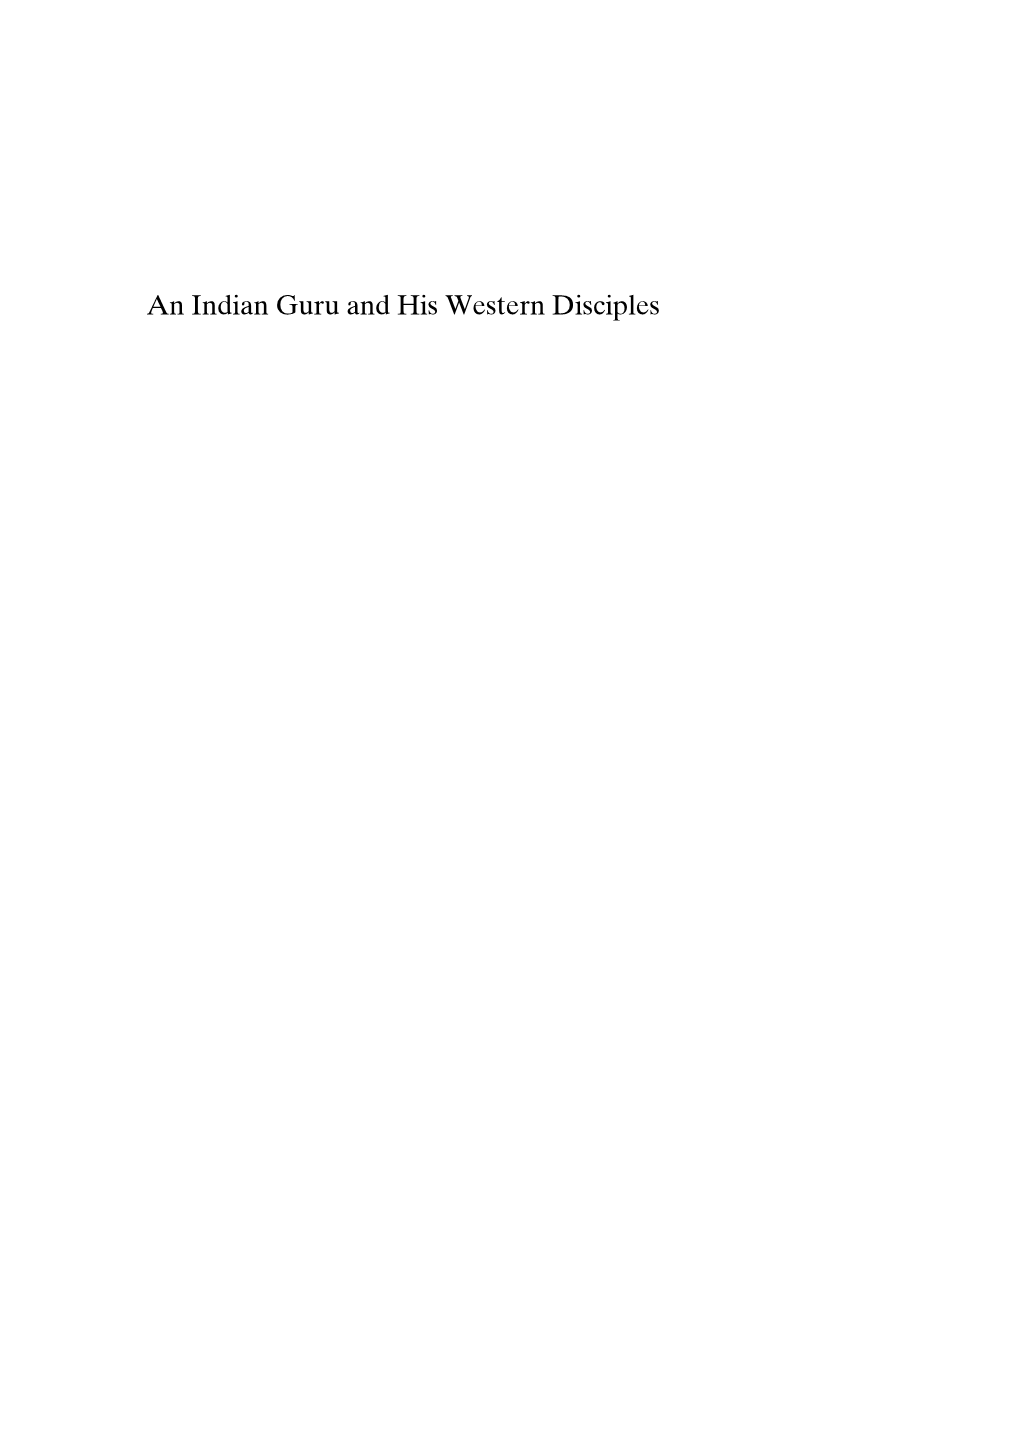 An Indian Guru and His Western Disciples Ii